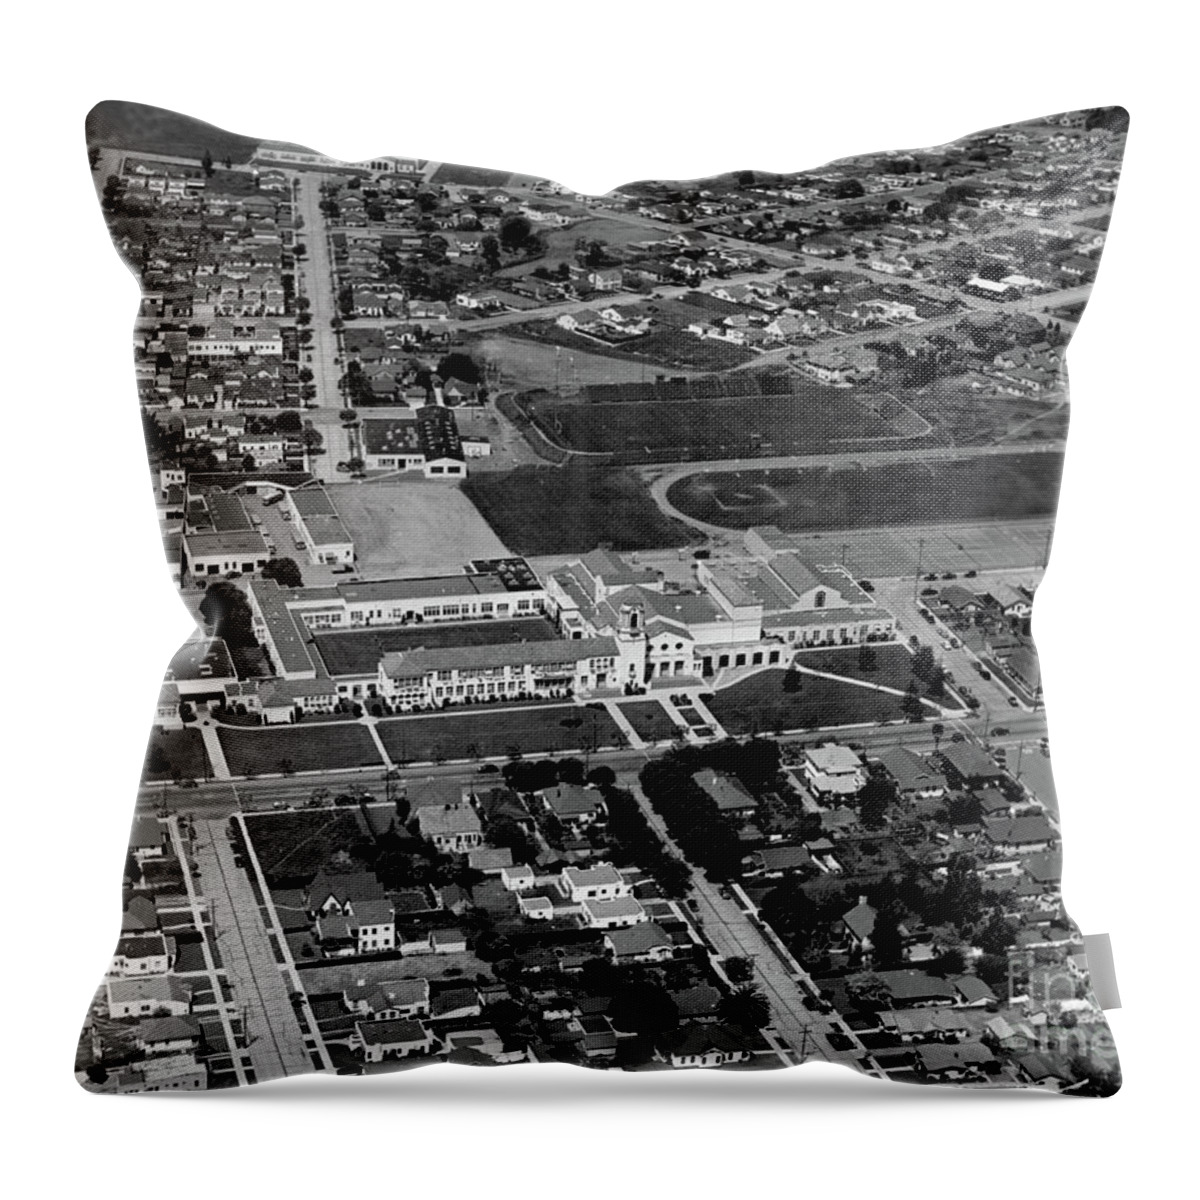 Salinas High School Throw Pillow featuring the photograph Salinas High School 726 S. Main Street, Salinas Circa 1950 by Monterey County Historical Society